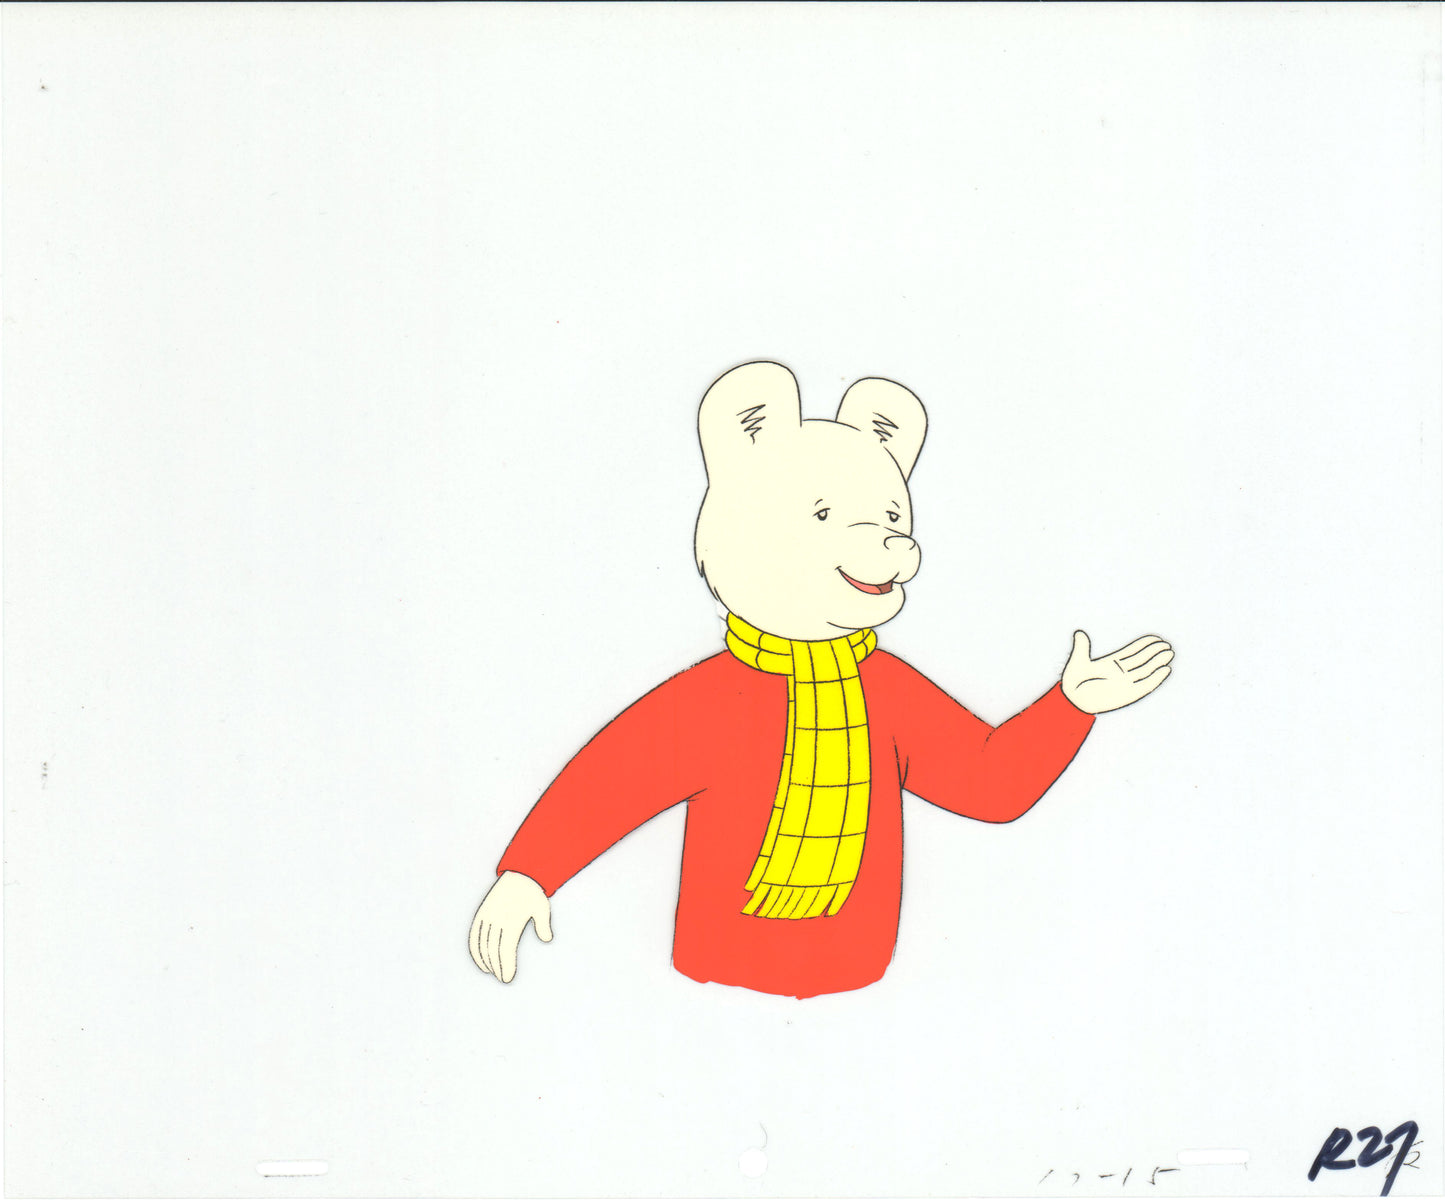 RUPERT Bear Original Production Animation Cel from the Cartoon by Nelvana Tourtel Animation 1990s 8-204